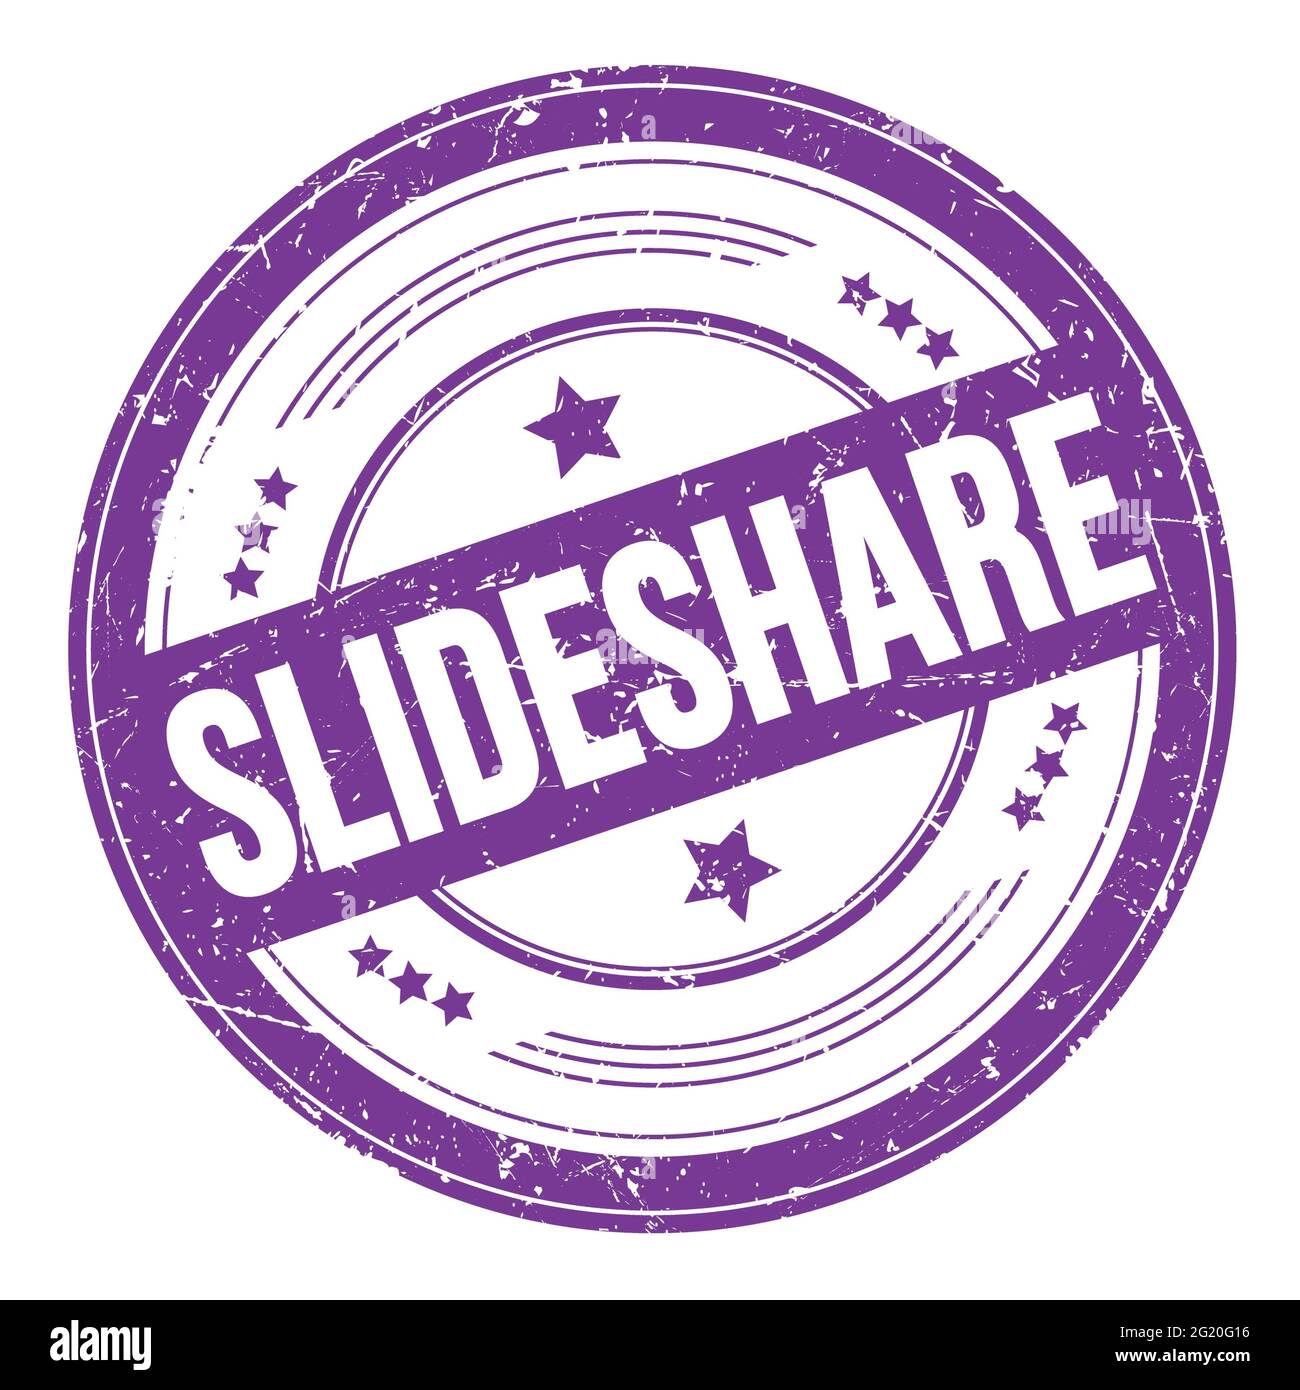 slideshare logo transparent